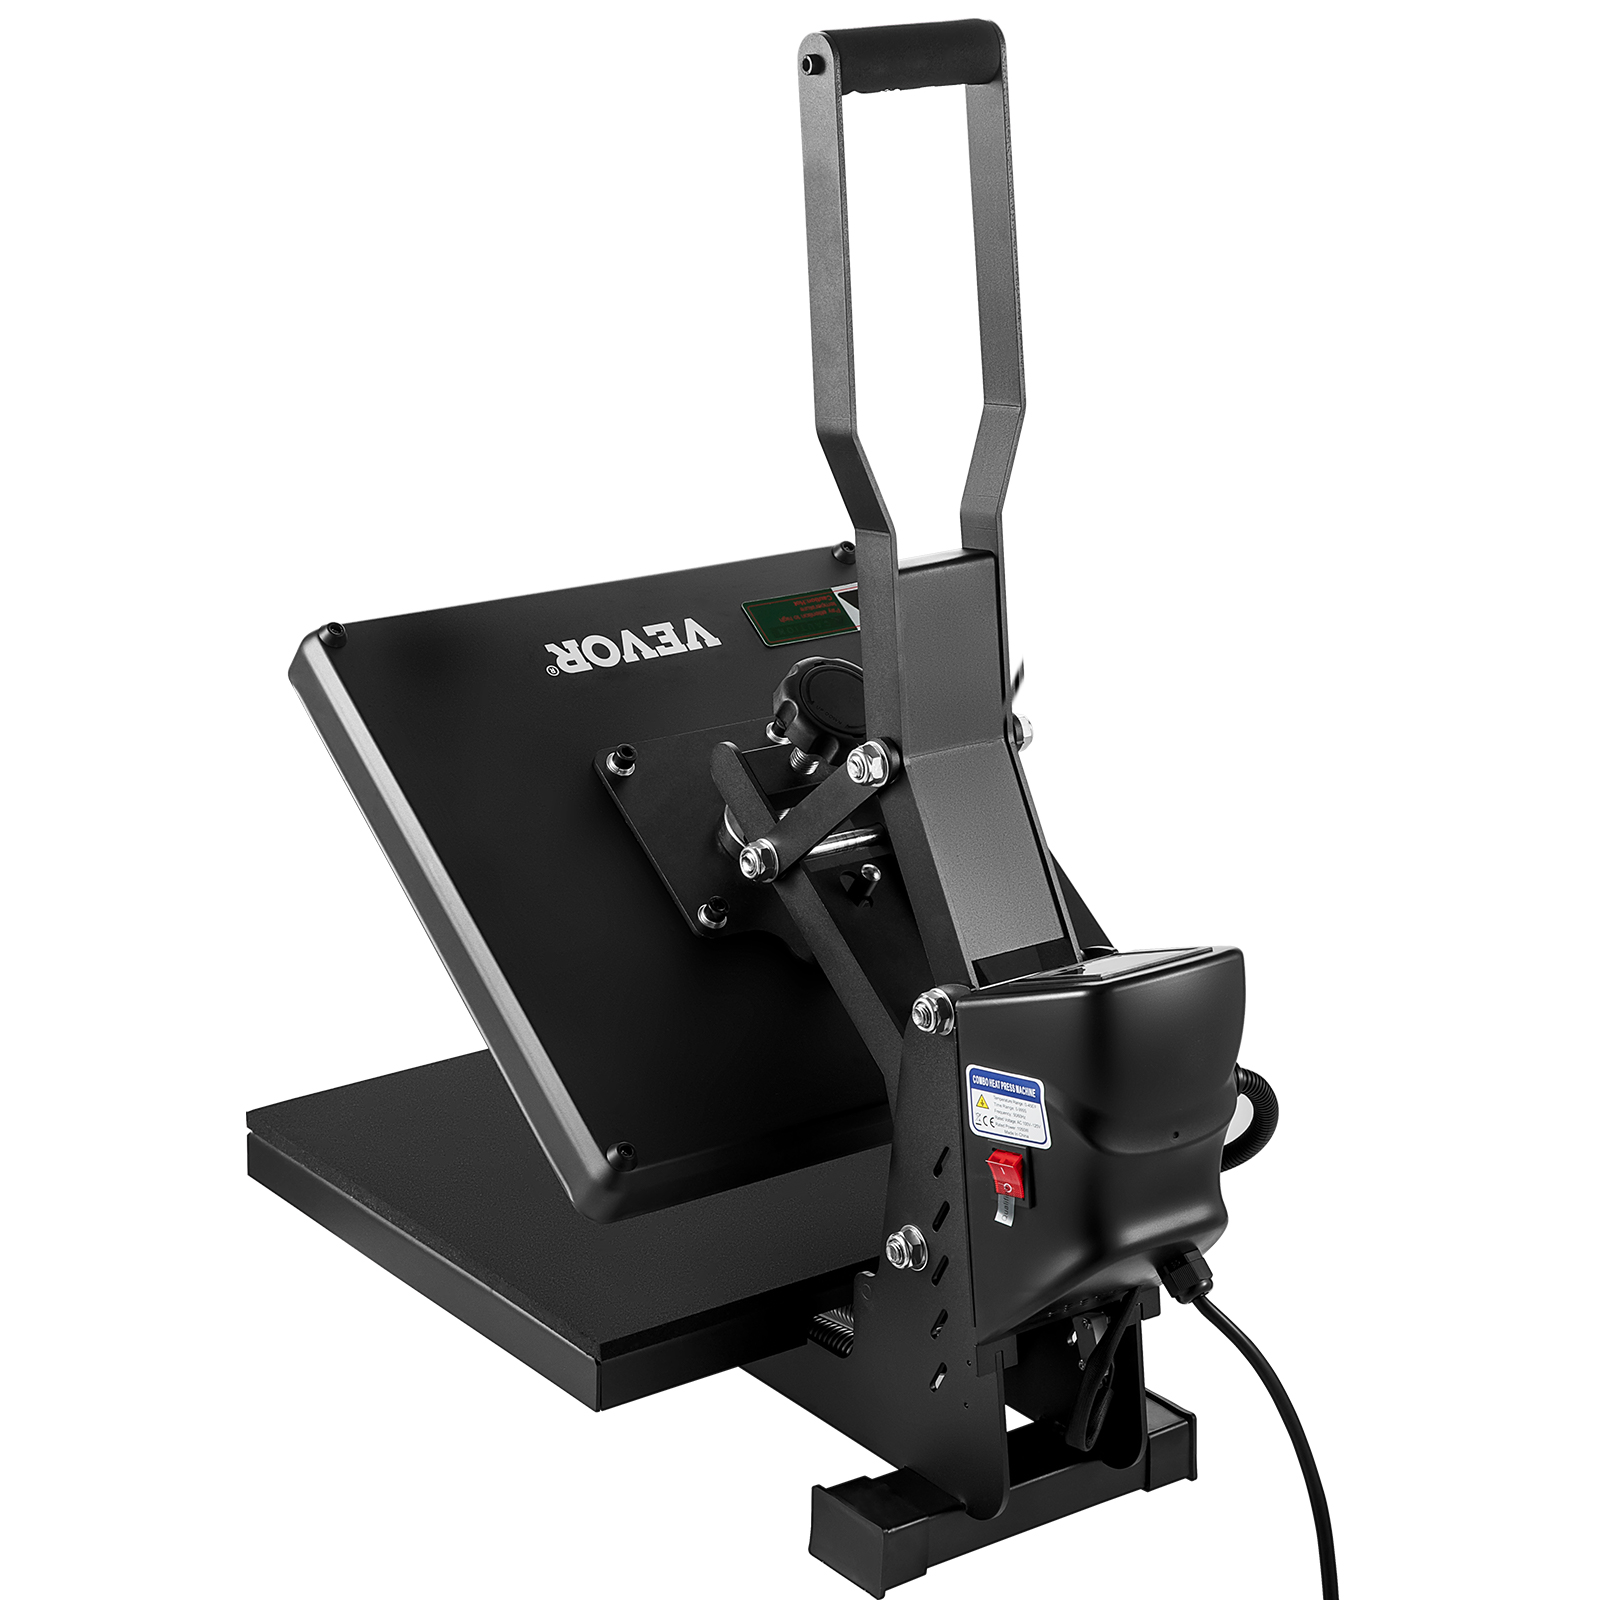 VEVOR Heat Press Machine 15 x 15 in Sublimation Printer Transfer for DIY T-Shirt Black GDSYD1515110VZG9PV1